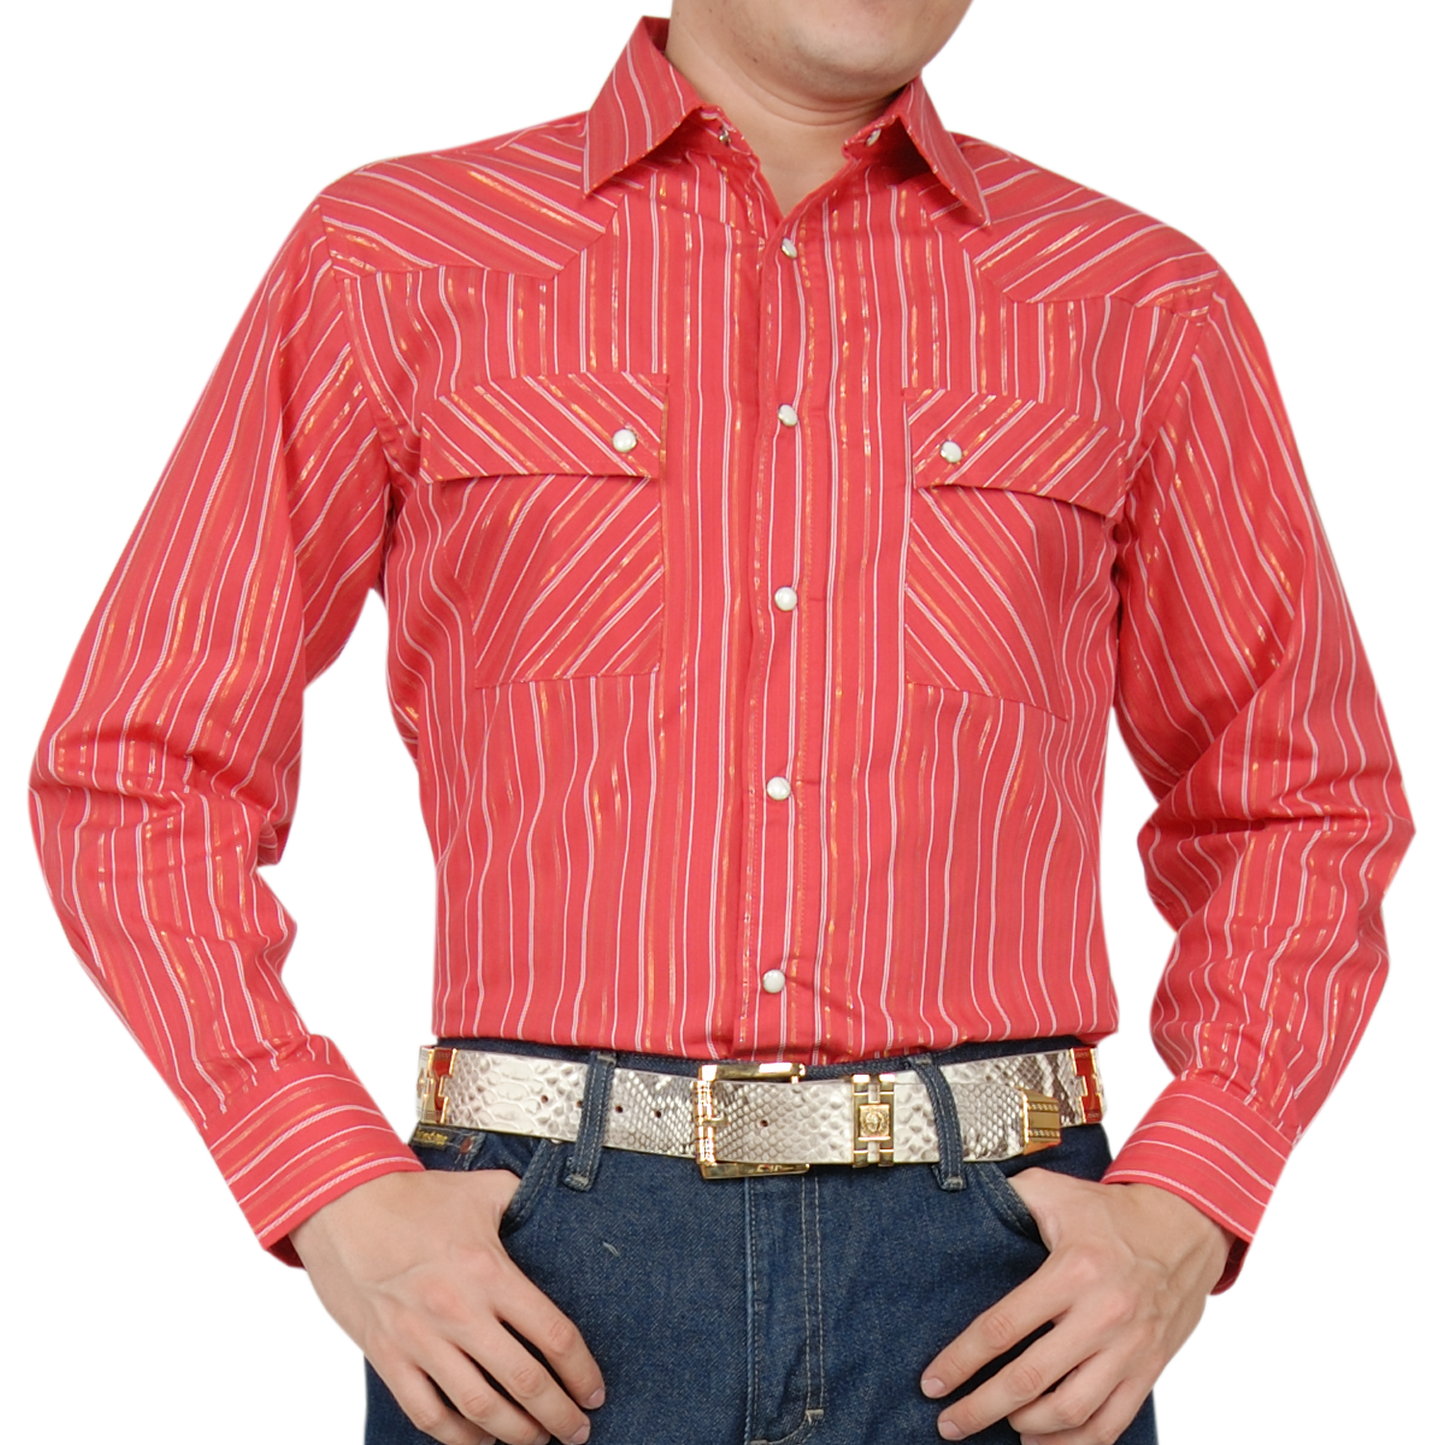 Twinstone Cowboy Shirt TS-10